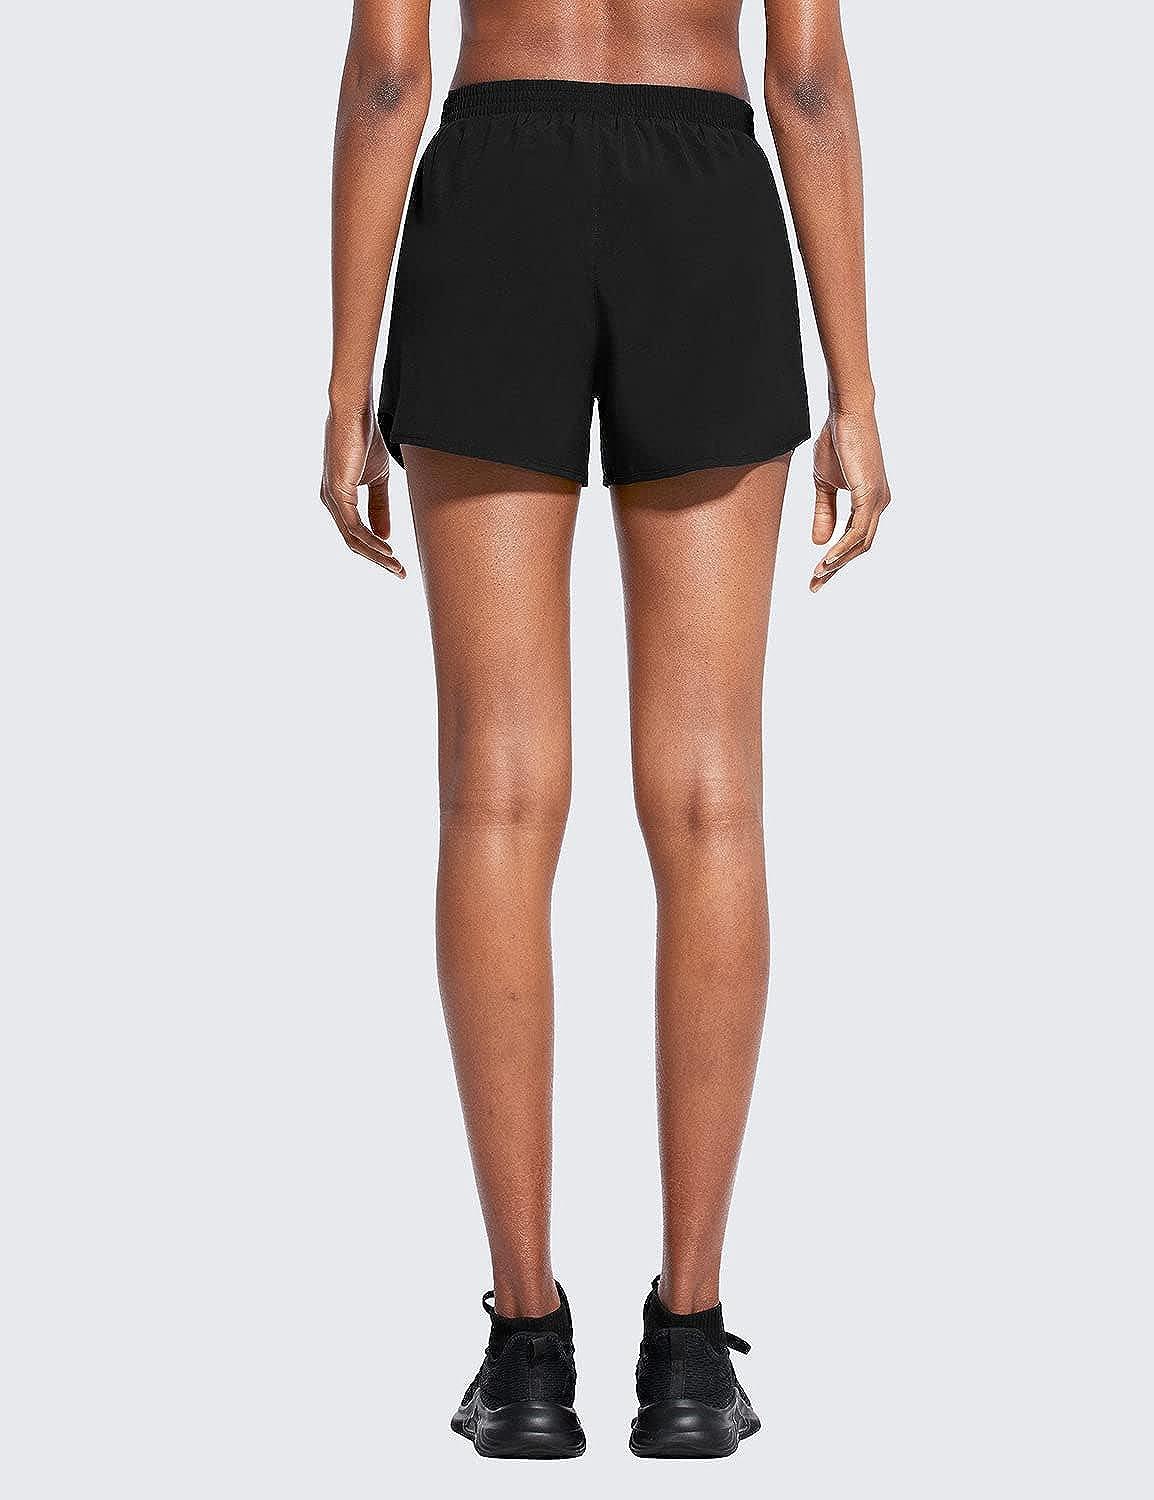 BALEAF Women's 3 Running Athletic Shorts Quick Dry Gym Workout Shorts with  Pockets Black Medium